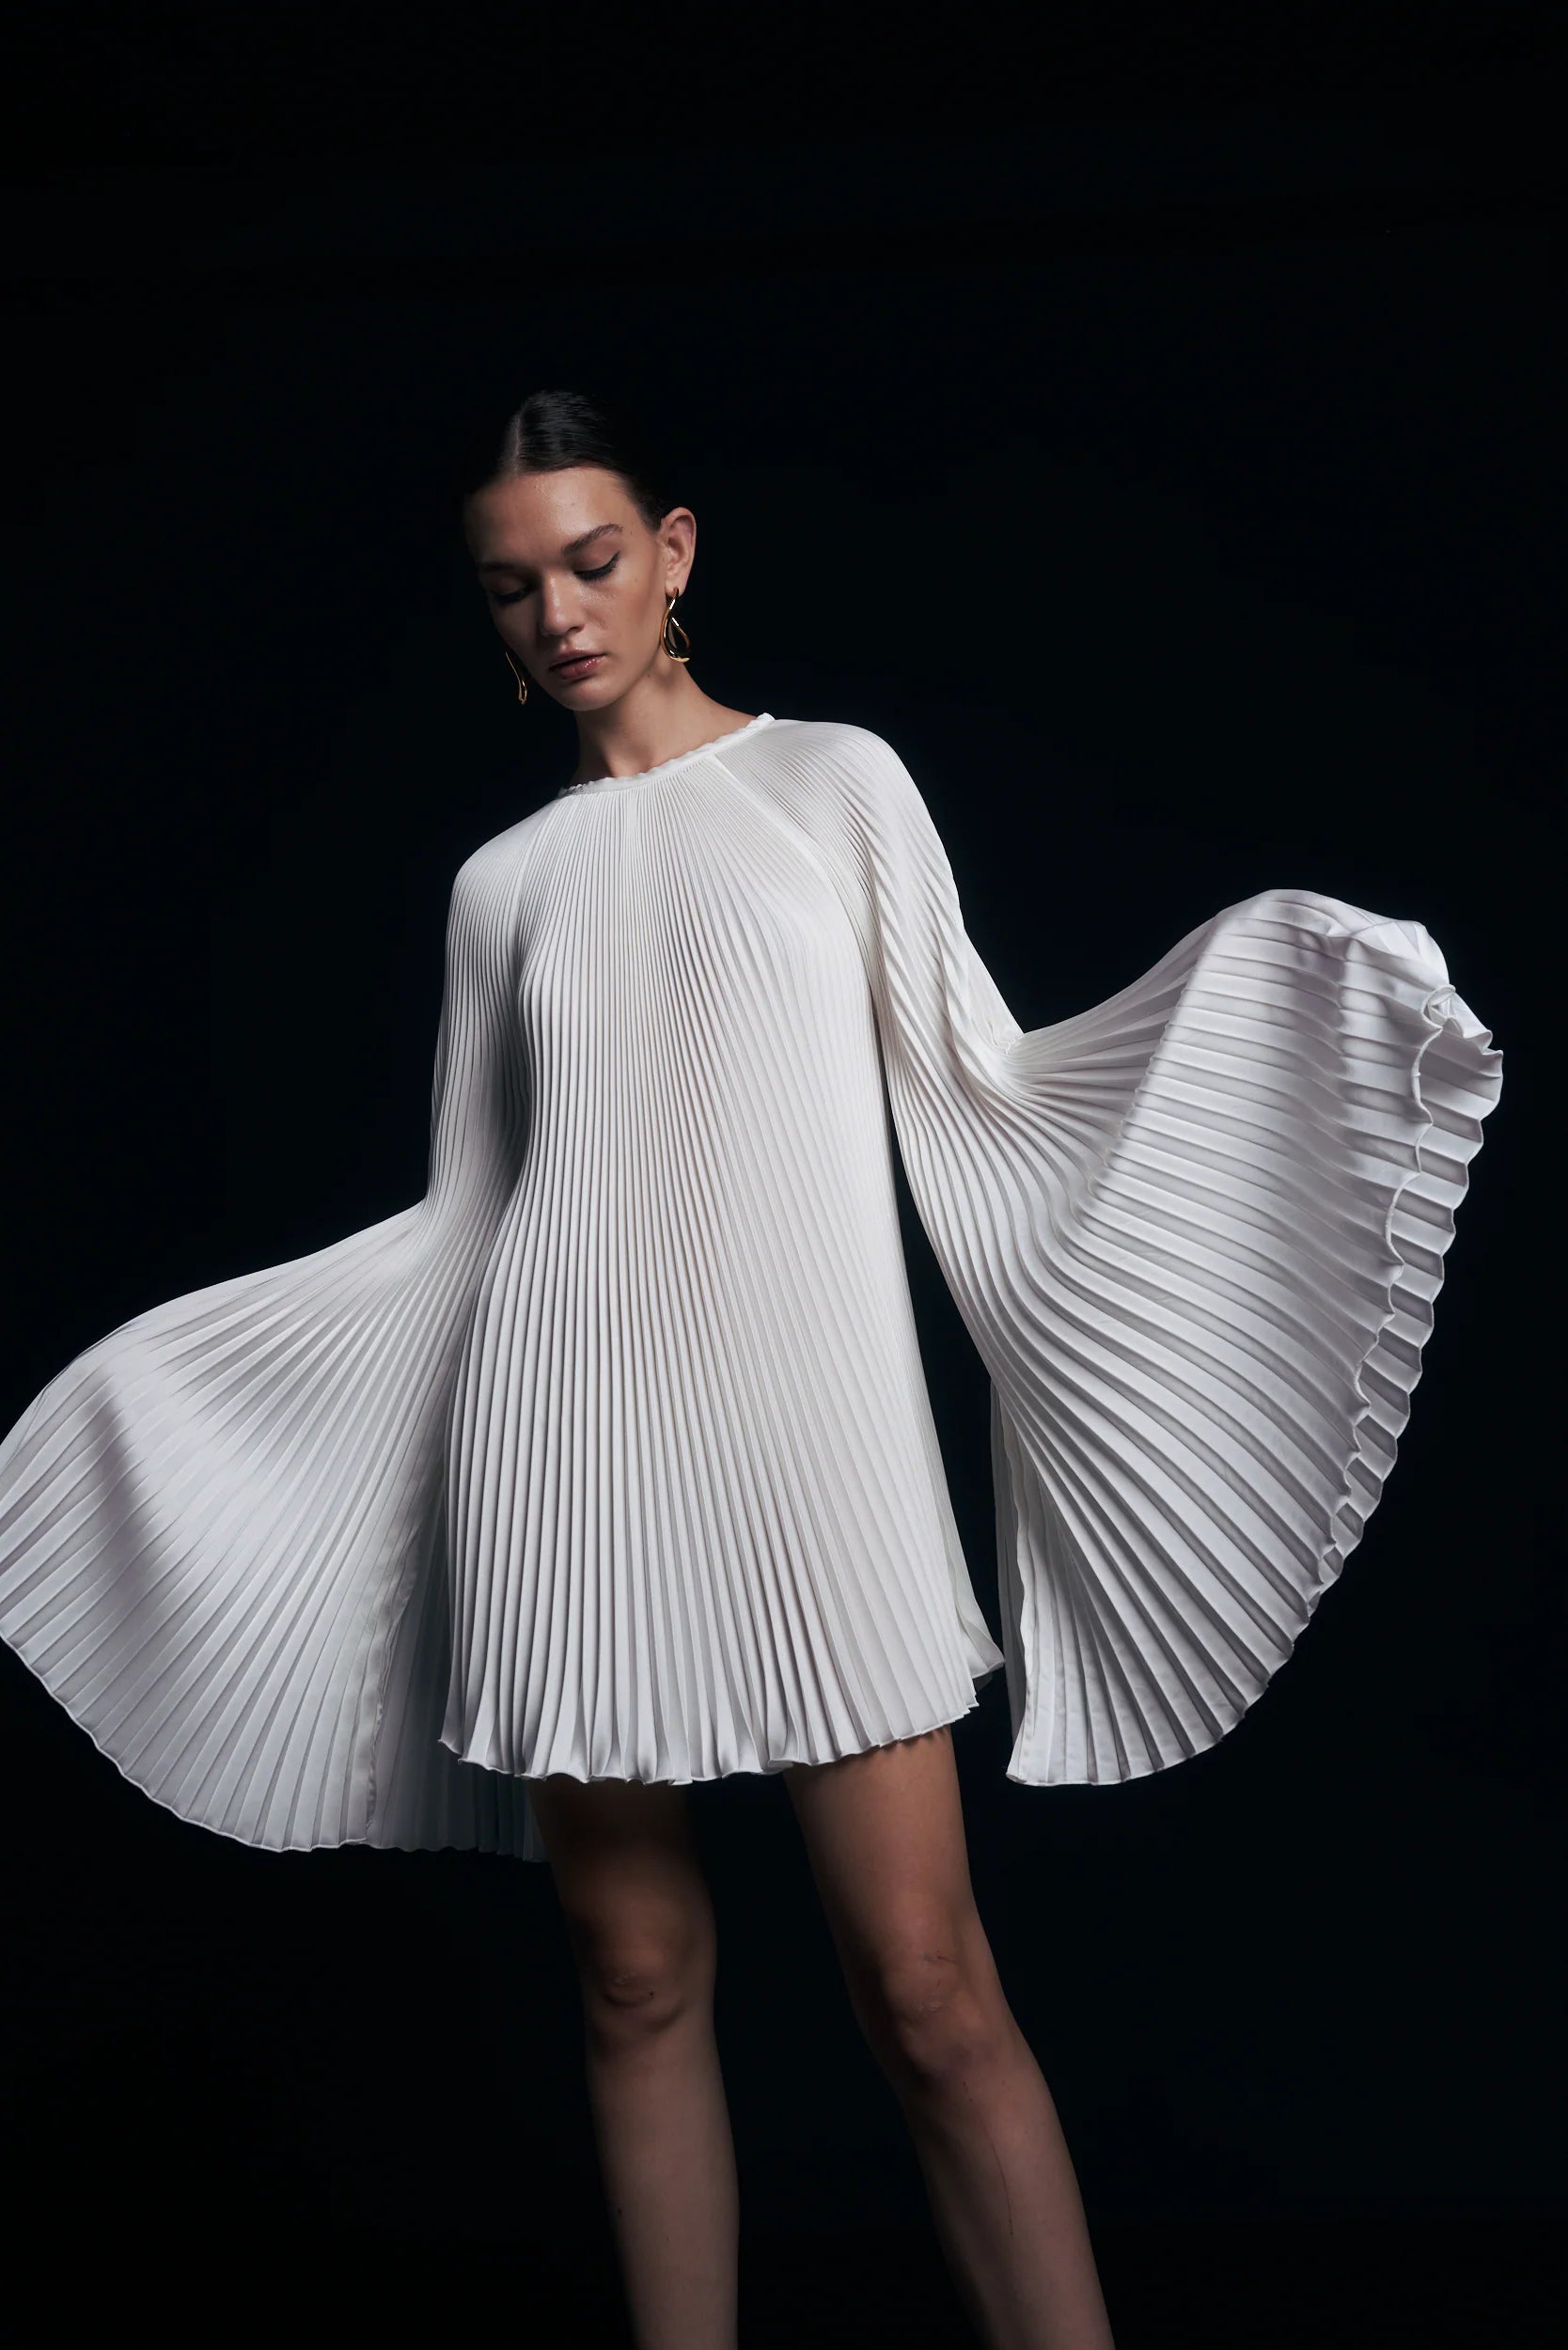 Sierra Long Sleeve Exposed Bra Maxi Dress in White